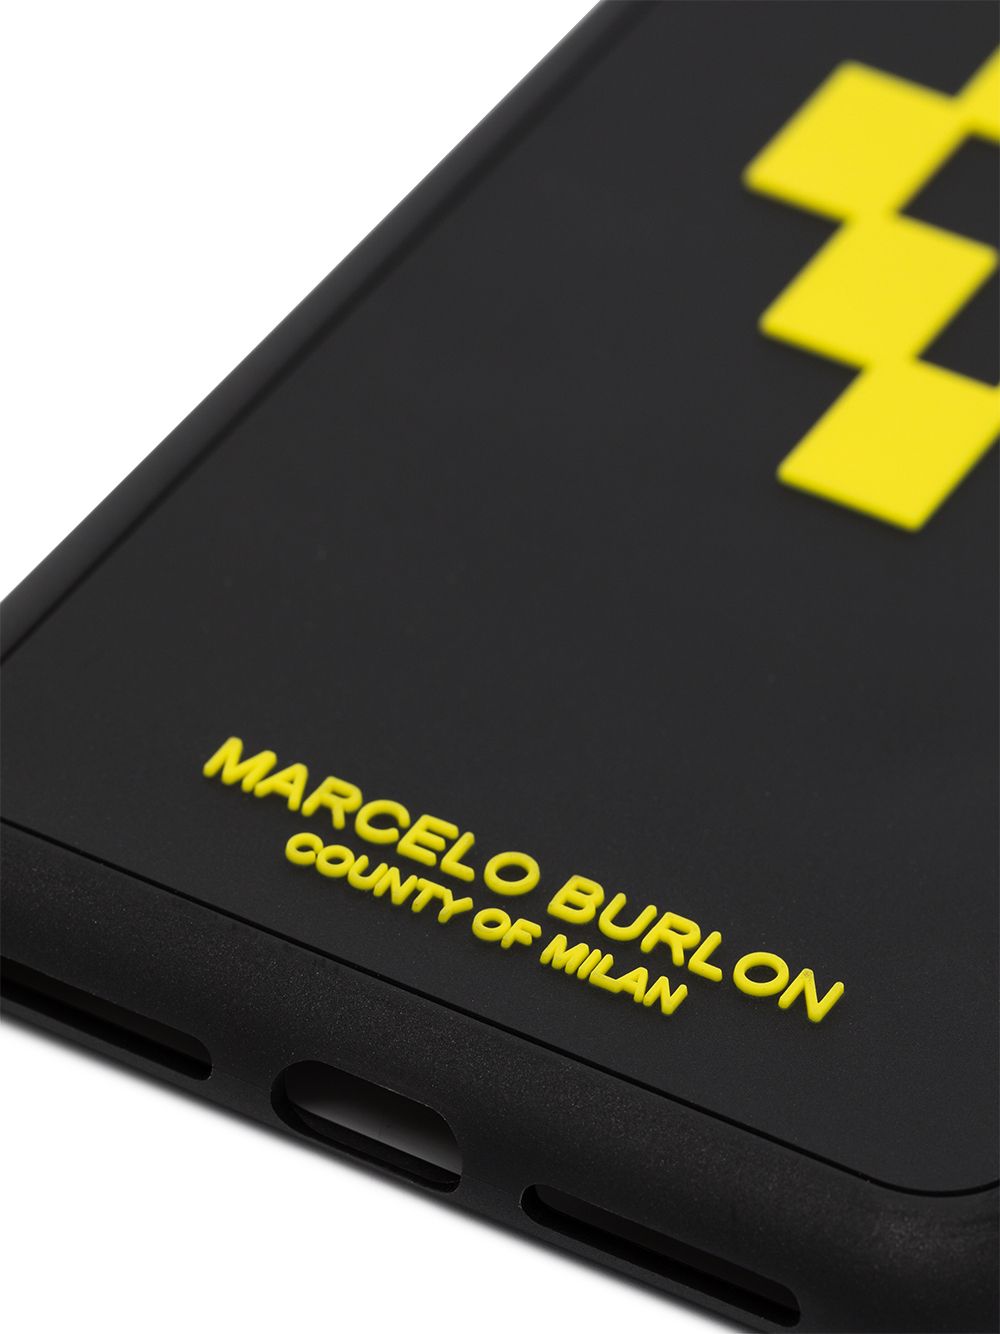 фото Marcelo burlon county of milan чехол для iphone xs max с логотипом